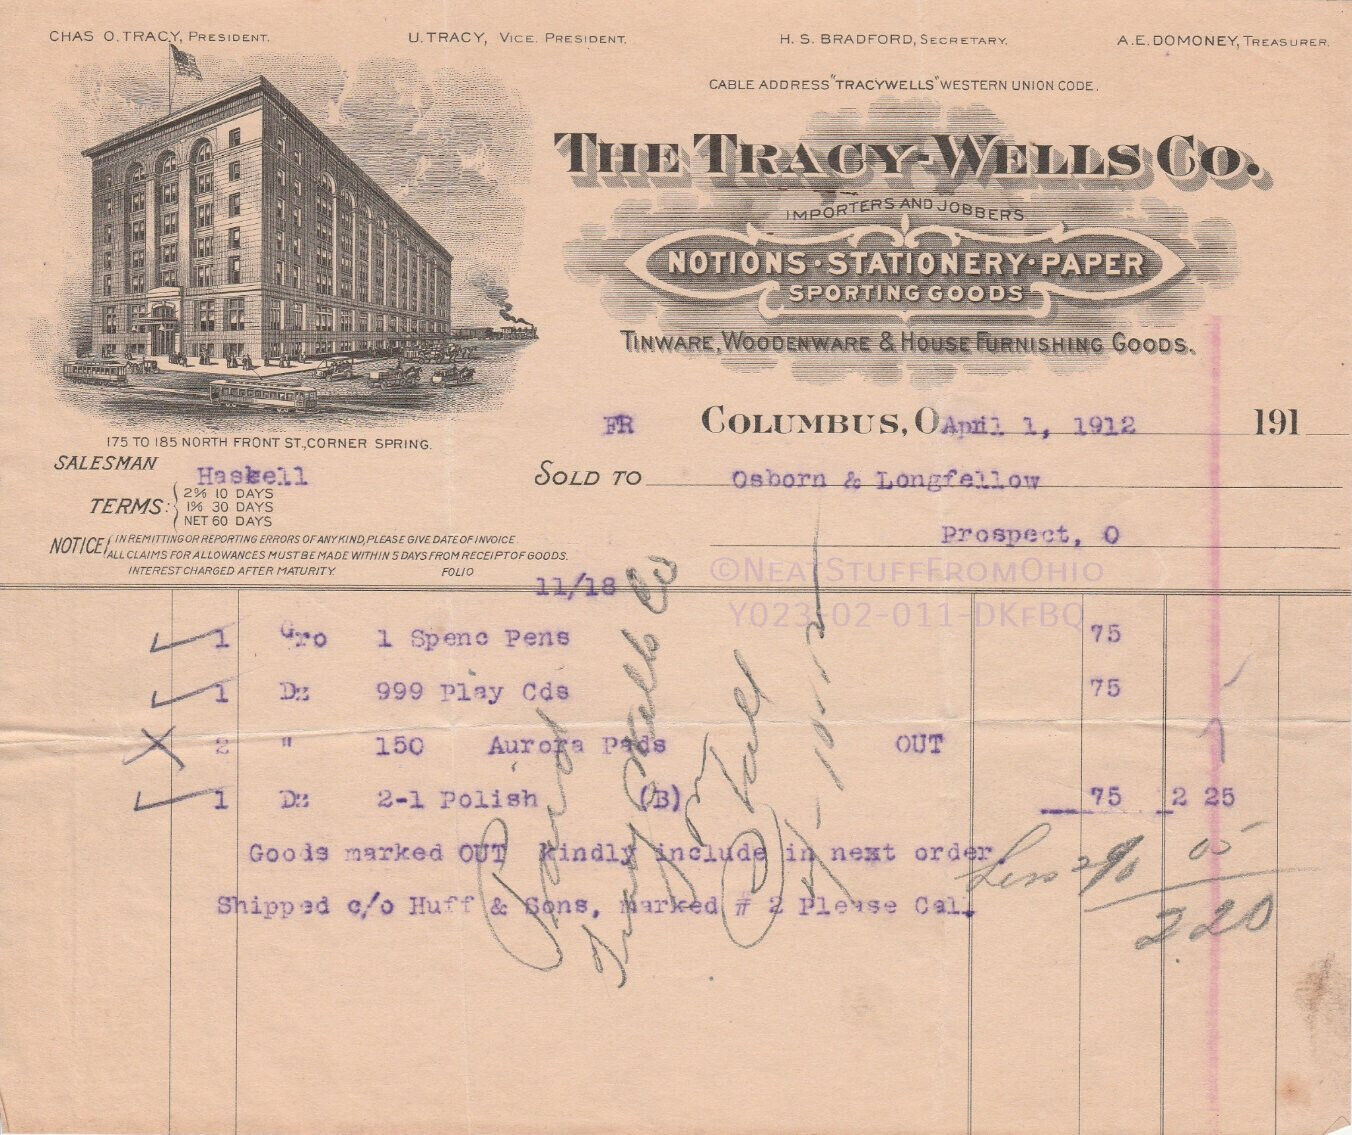 TRACY-WELLS CO., COLUMBUS, OH (APRIL 1912) OSBORN & LONGFELLOW, PROSPECT, OH 👈